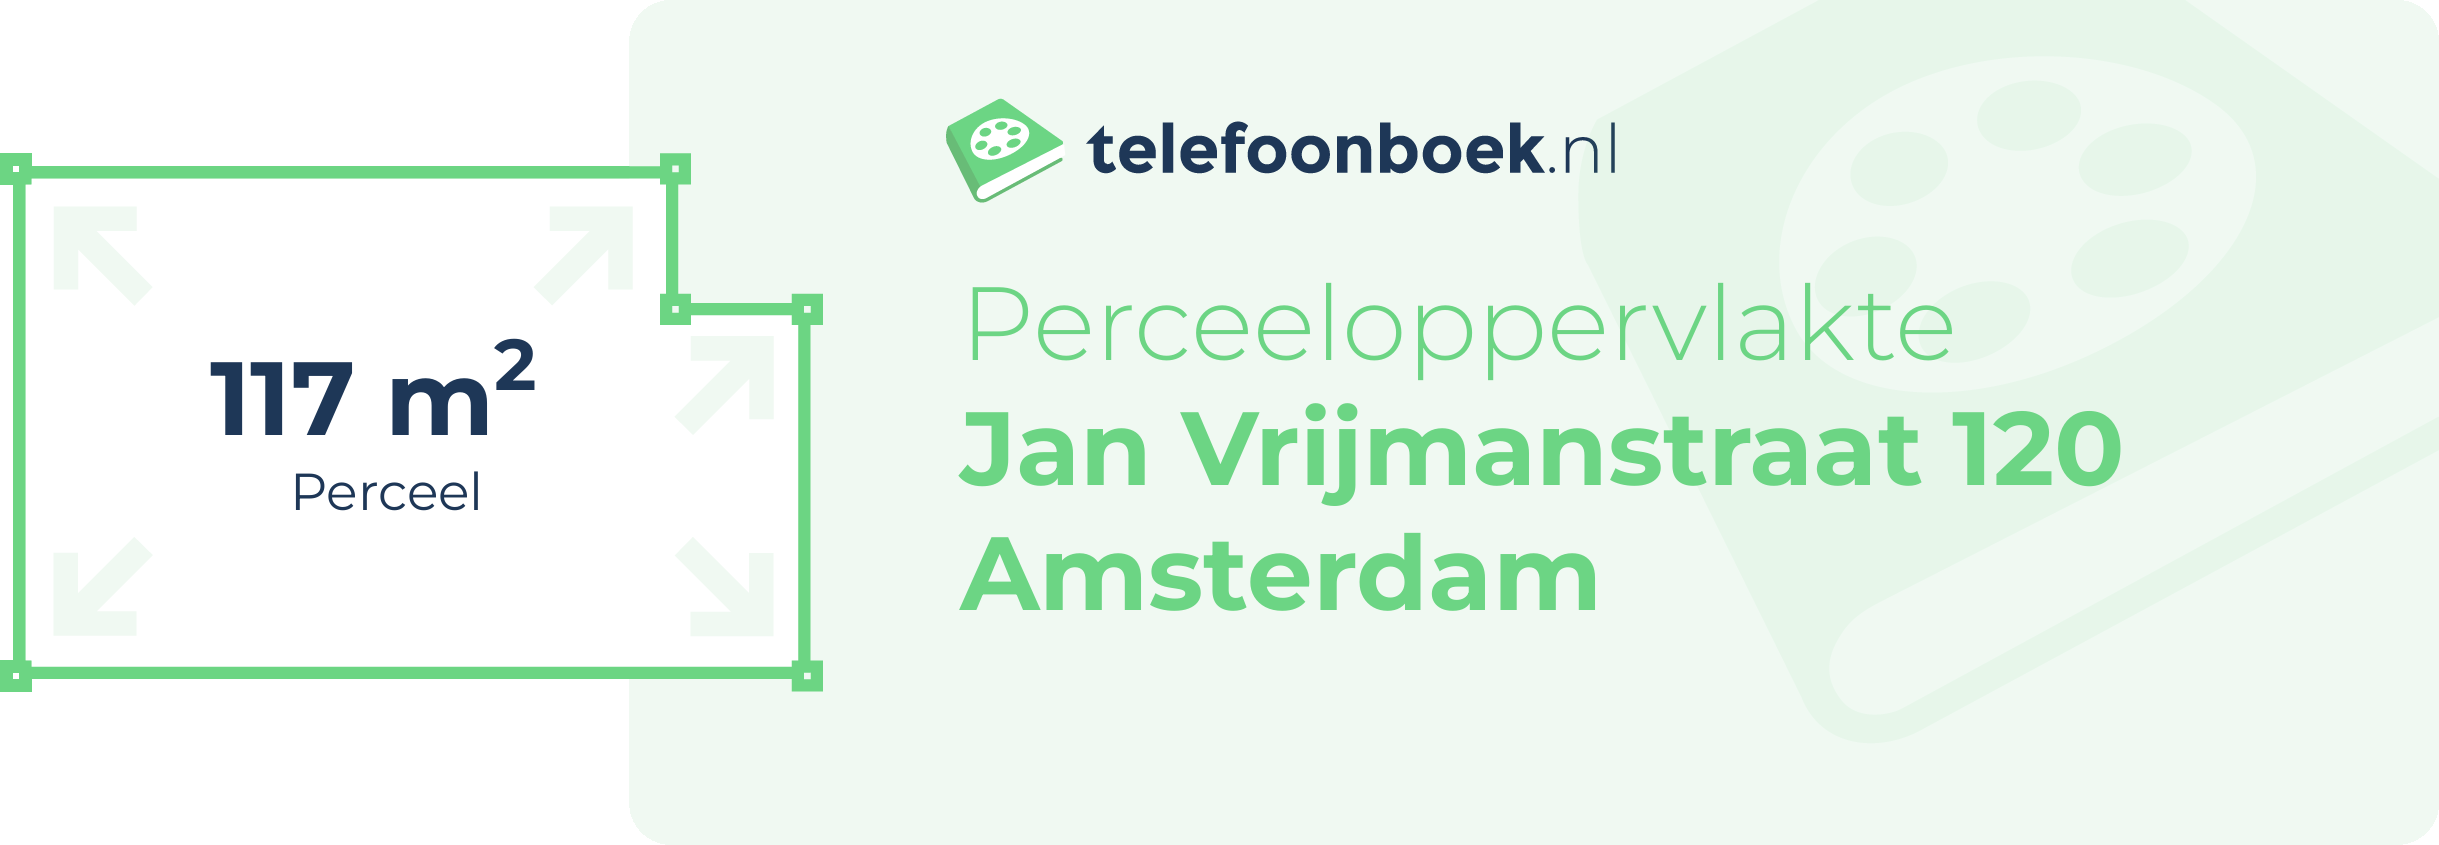 Perceeloppervlakte Jan Vrijmanstraat 120 Amsterdam